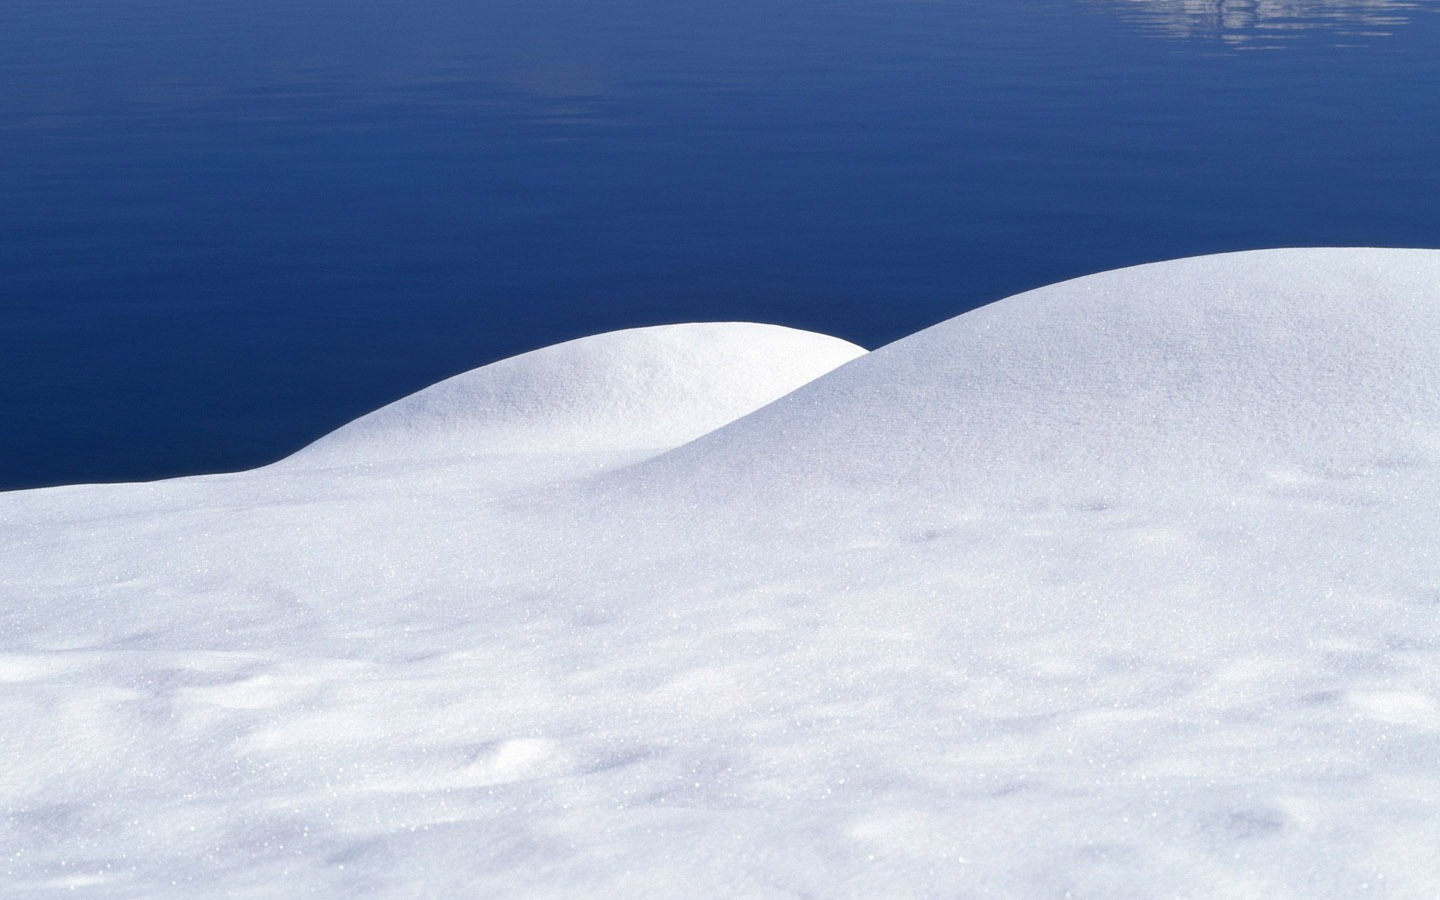 HD wallpaper cool winter snow scene #16 - 1440x900